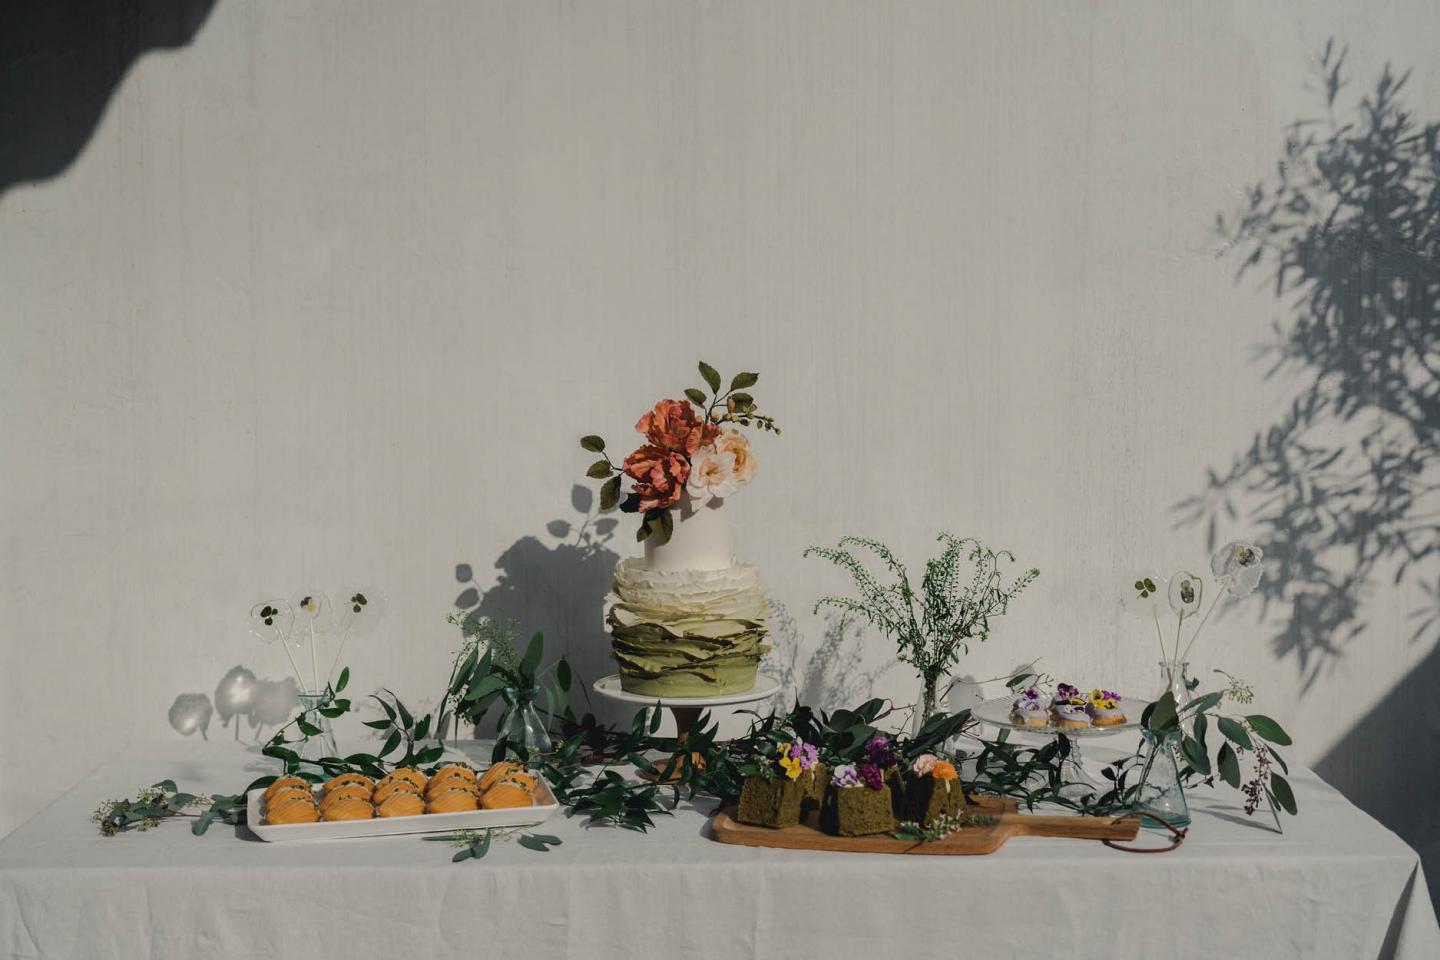 Venus與花店Oldsoul Florist創辦人Sally Wong在上環烘焙工作室The Mixing Bowl打造夢幻般的花藝蛋糕盛宴